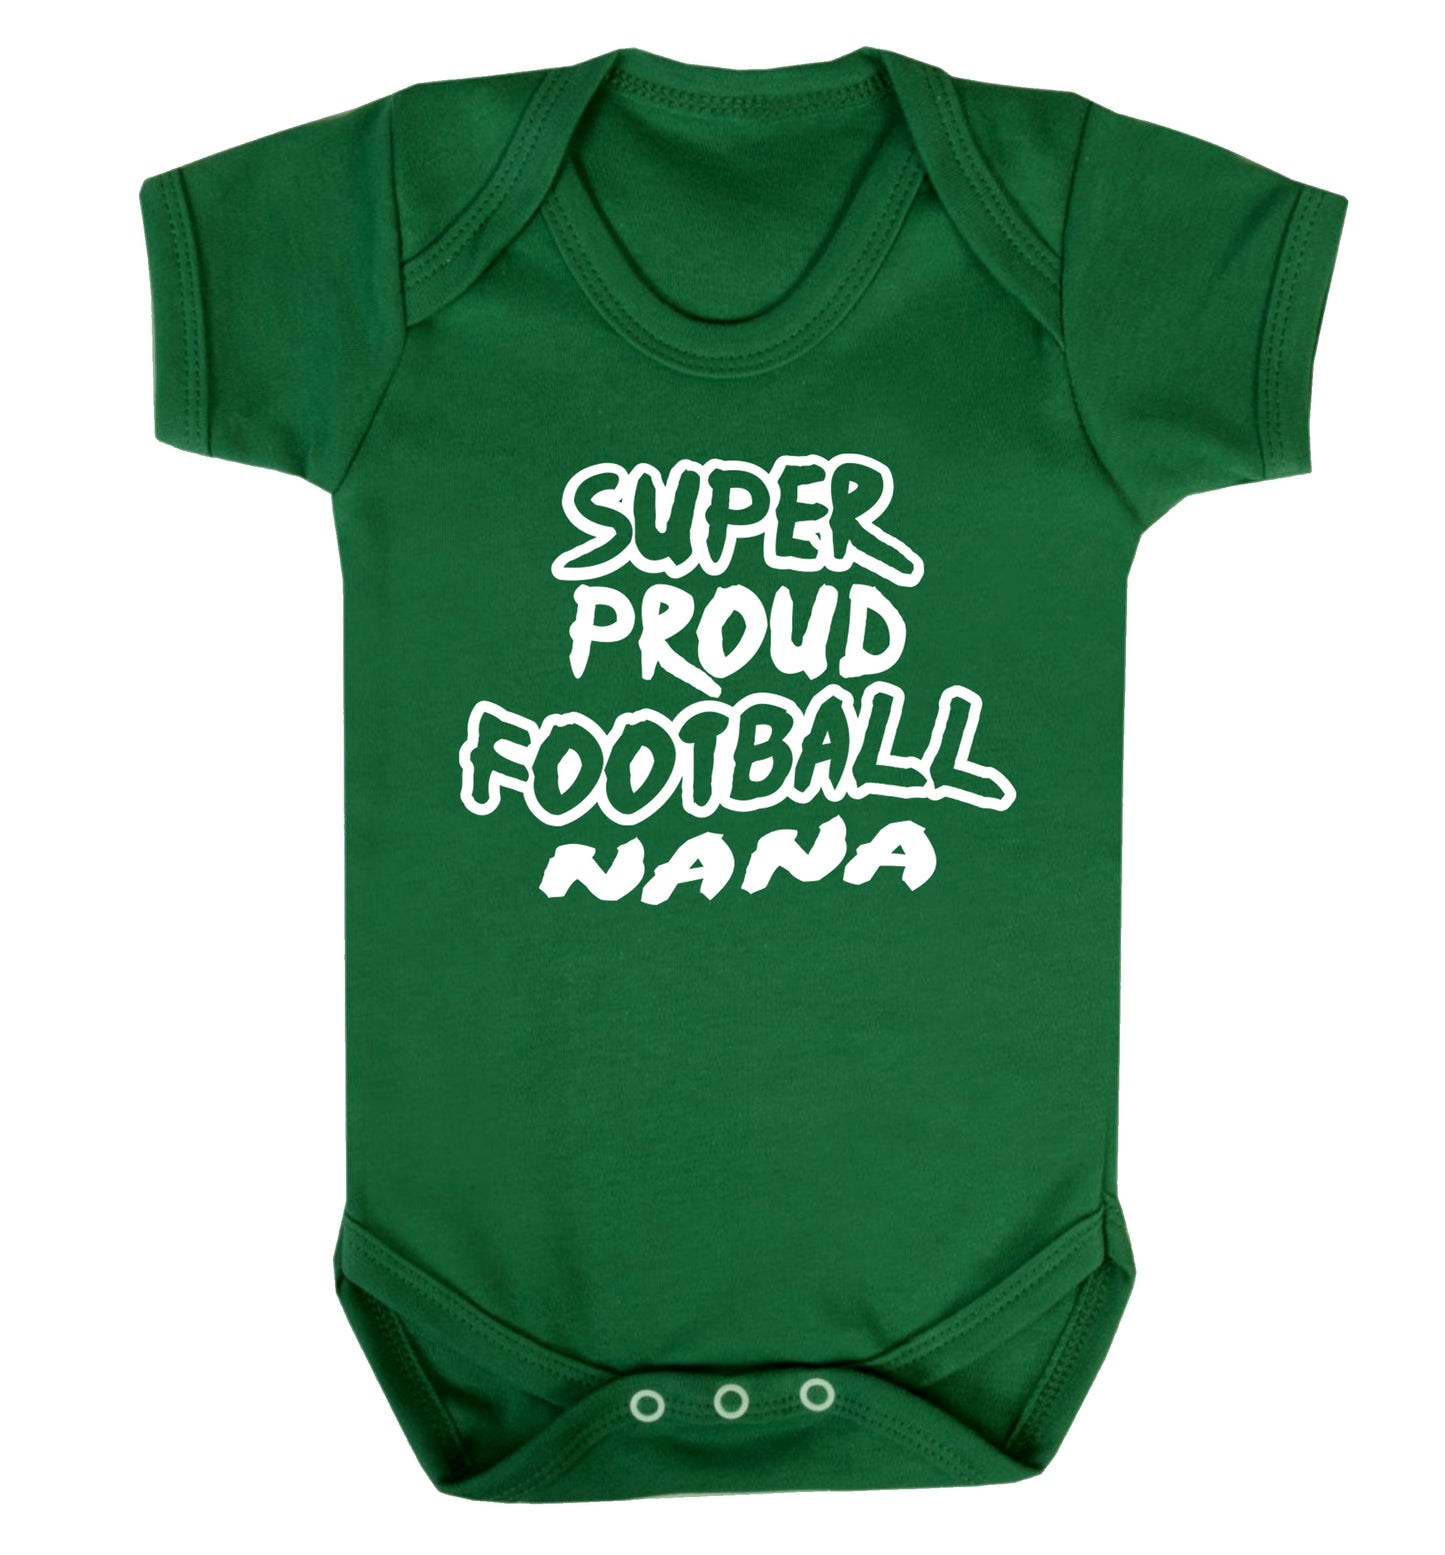 Super proud football nana Baby Vest green 18-24 months